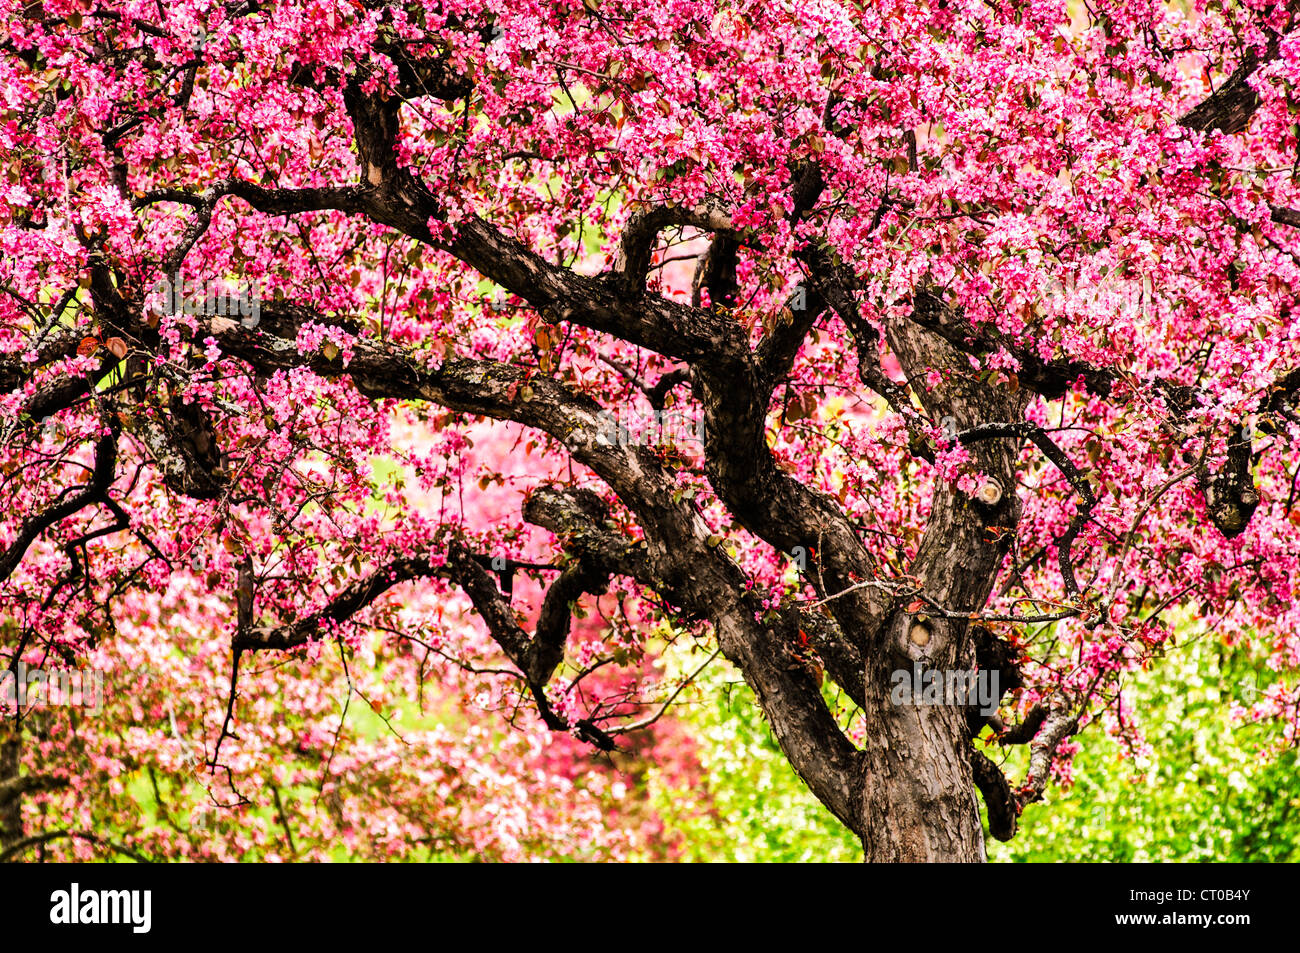 Apfelbäume in voller Blüte an der University of Minnesota Landschaft Arboretum im Frühjahr. Stockfoto